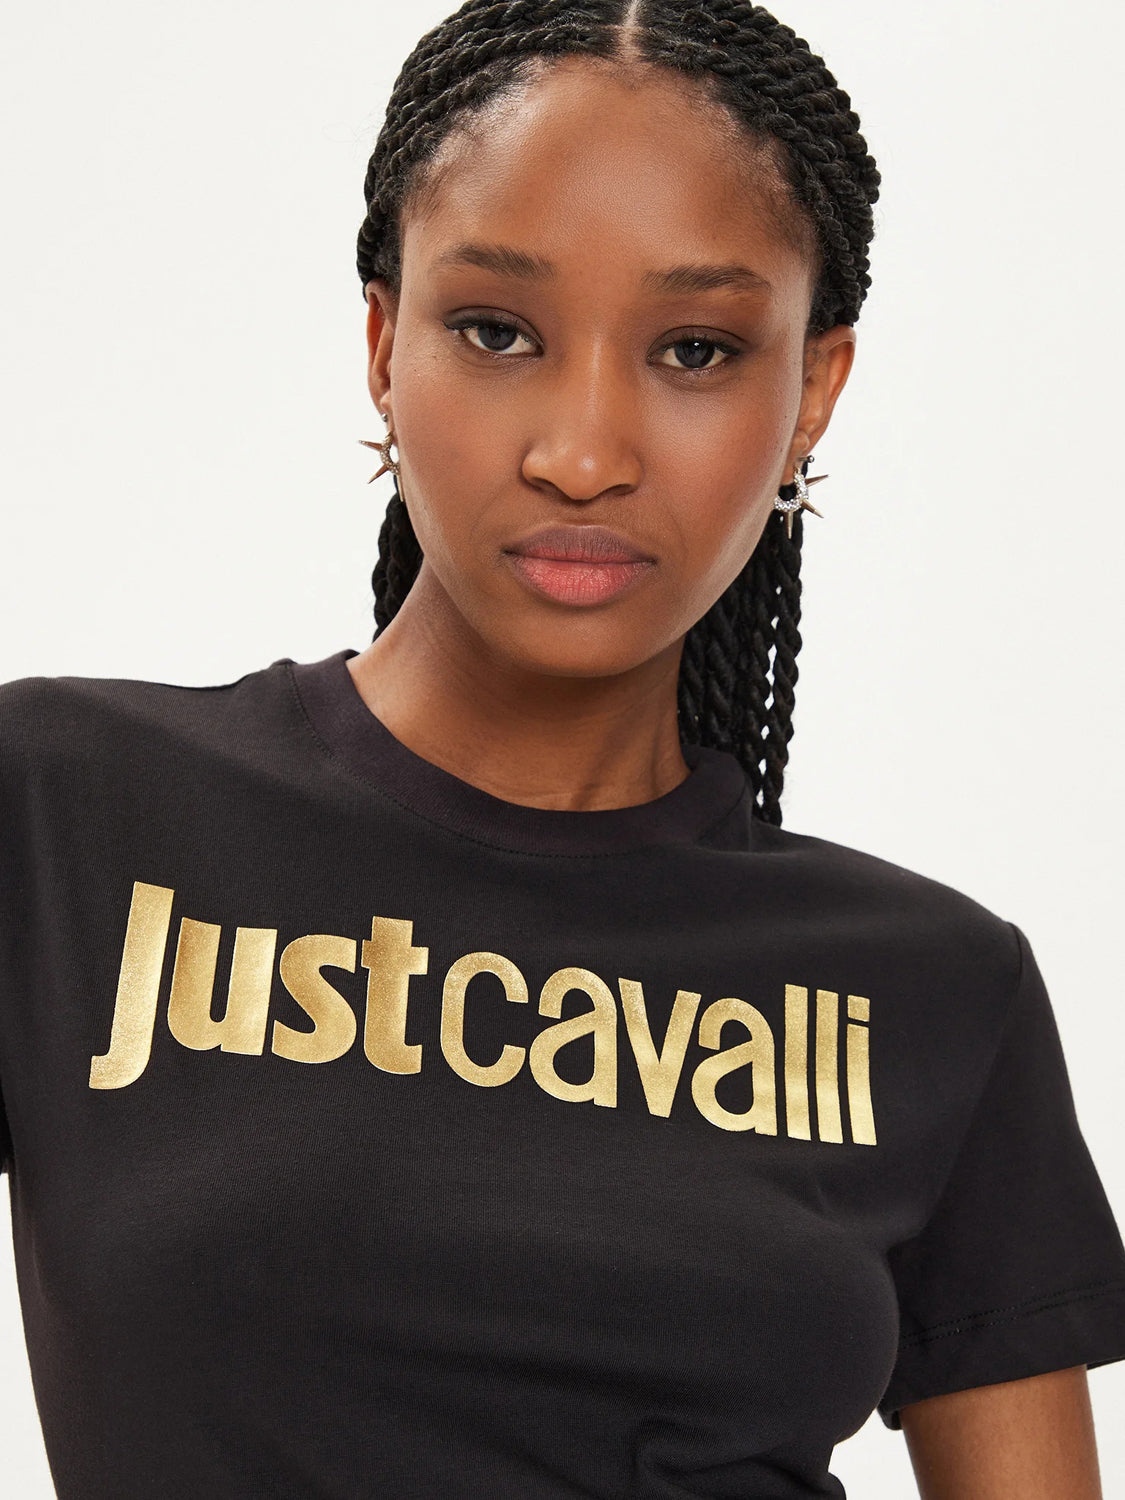 Just Cavalli T Shirt 76pahg11 Blk Gold Preto Ouro_shot2